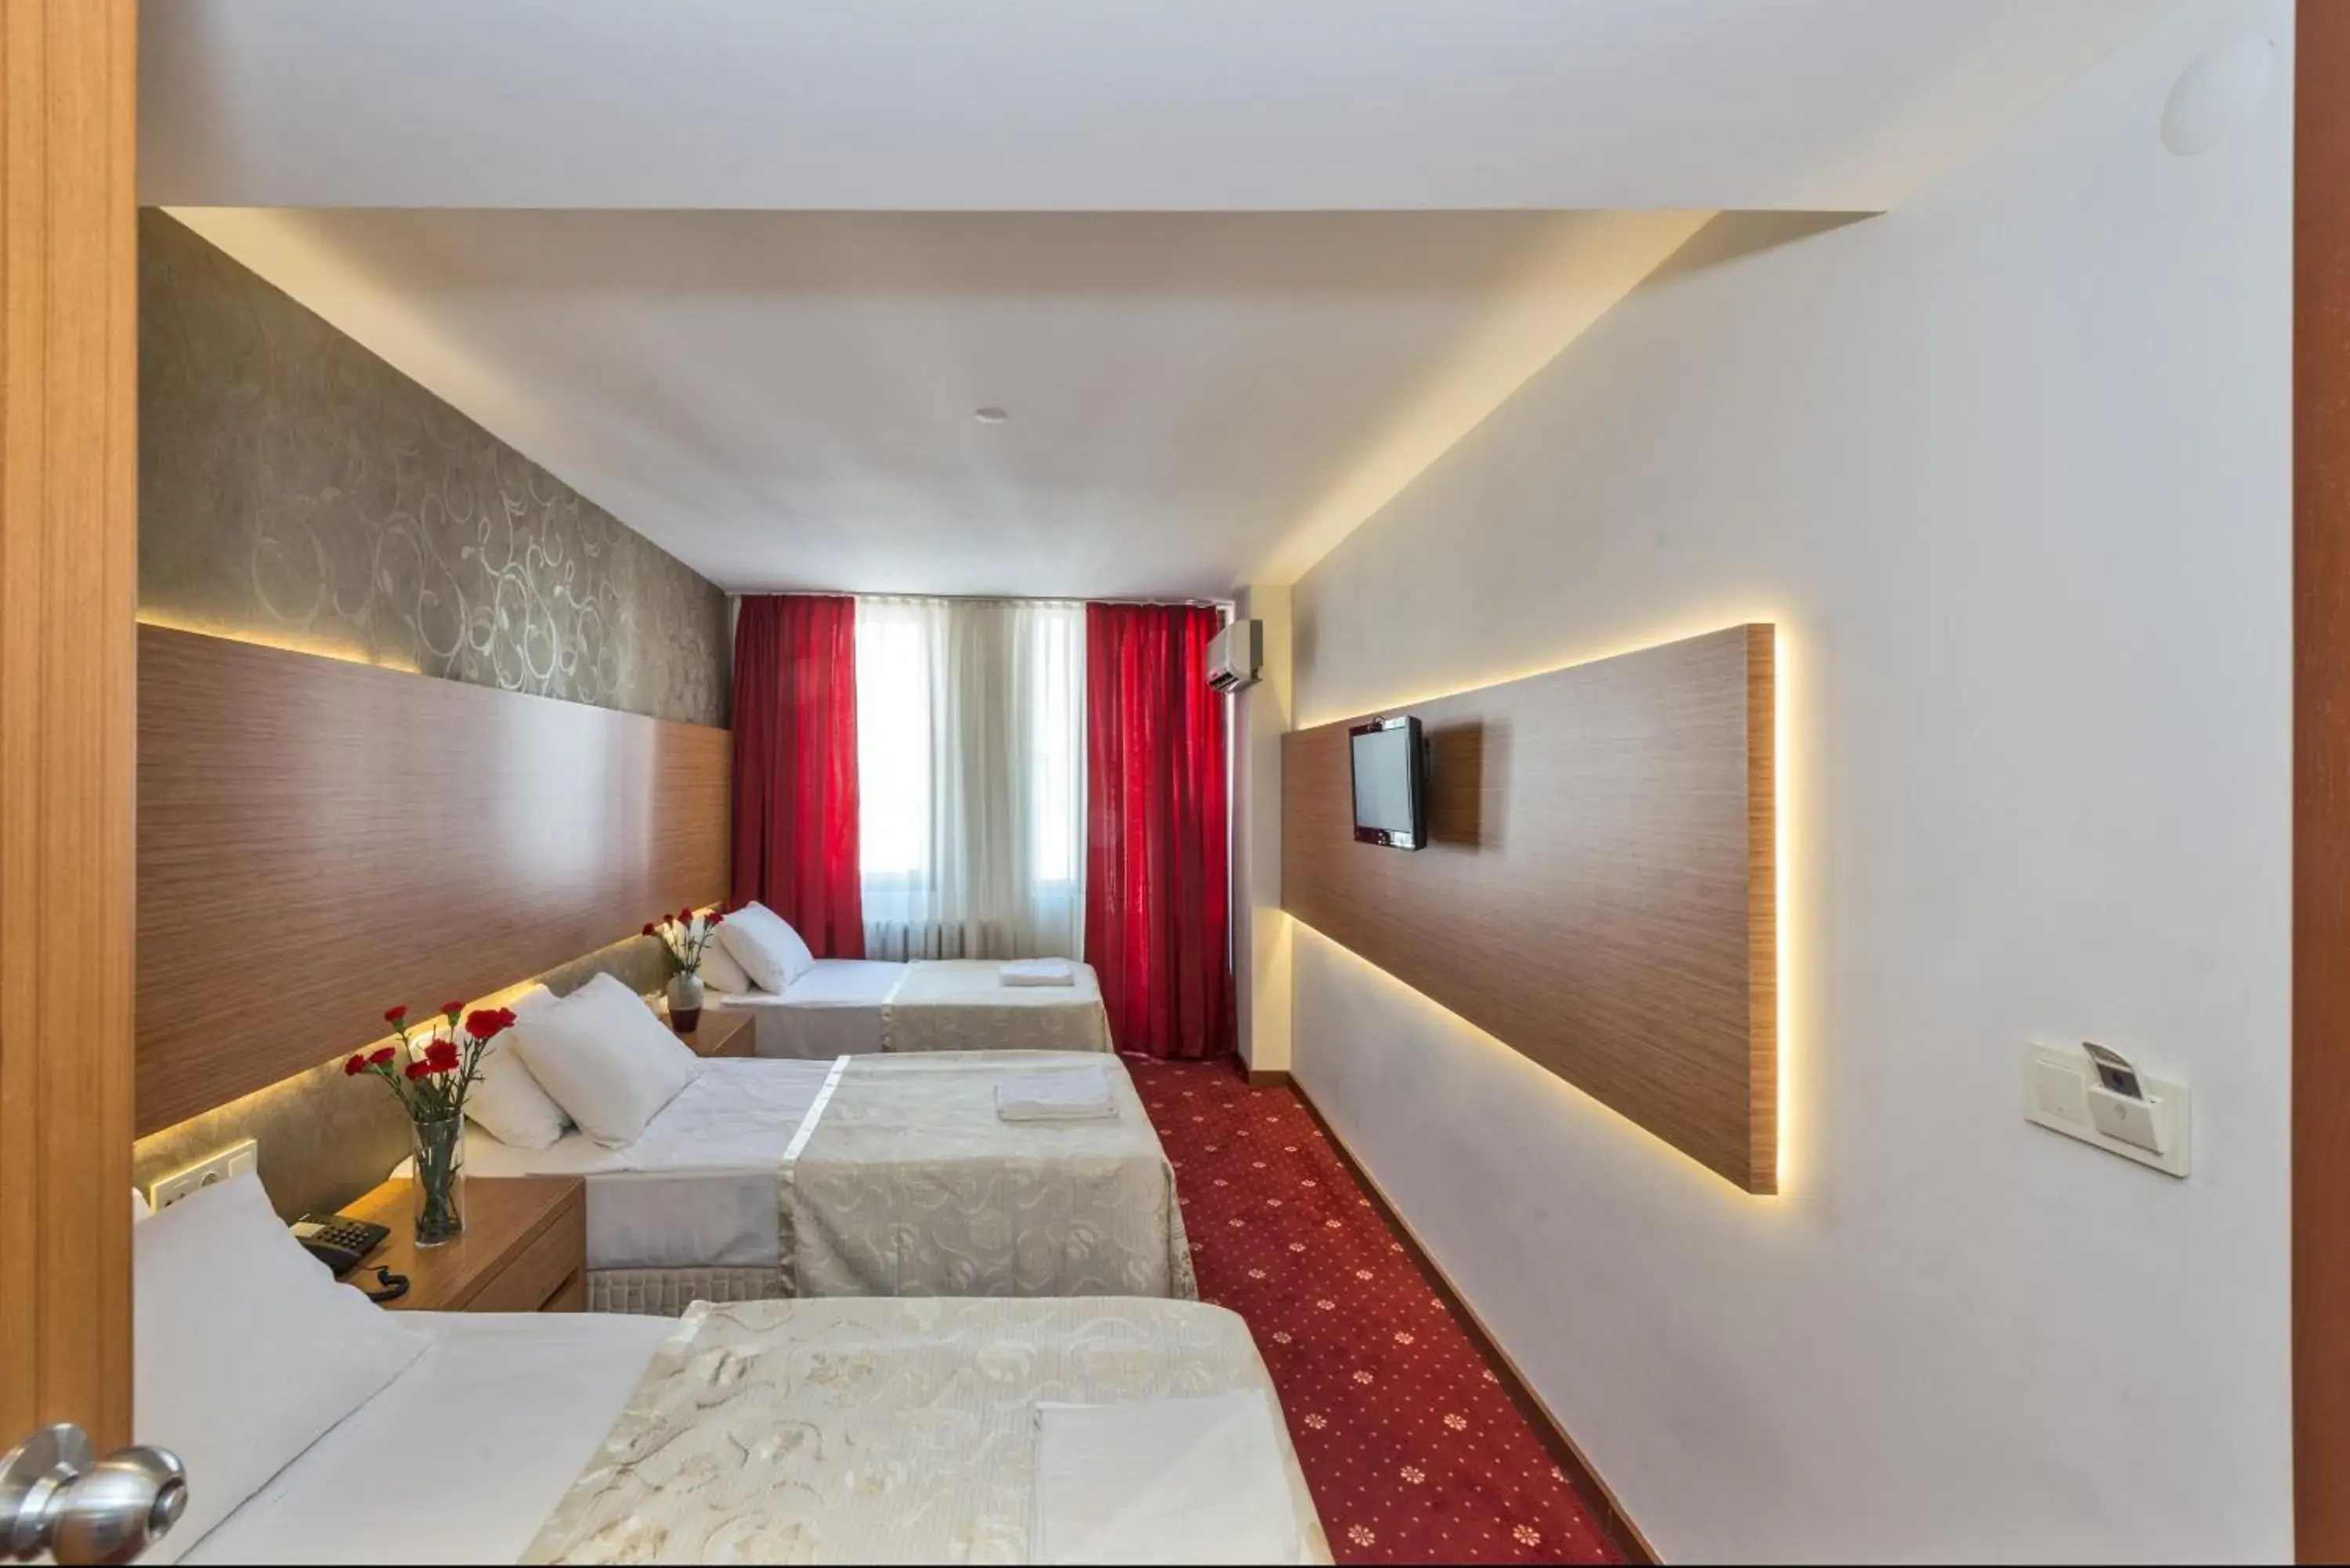 Photo of the whole room in Erbazlar Hotel